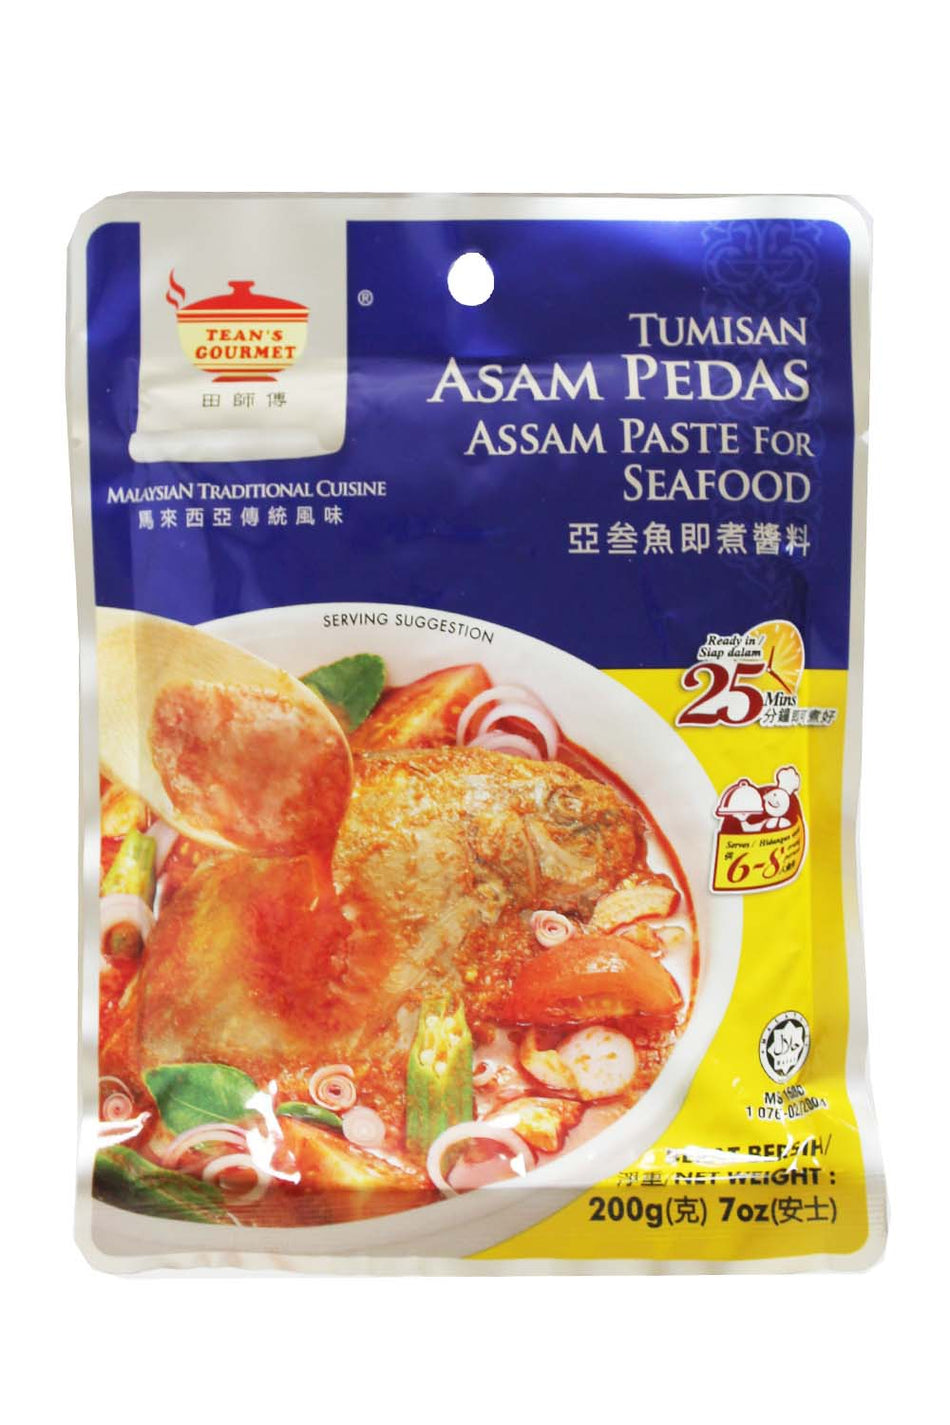 Tean Gourment Tumisan Asam Pedas Assam Paste for Seafood